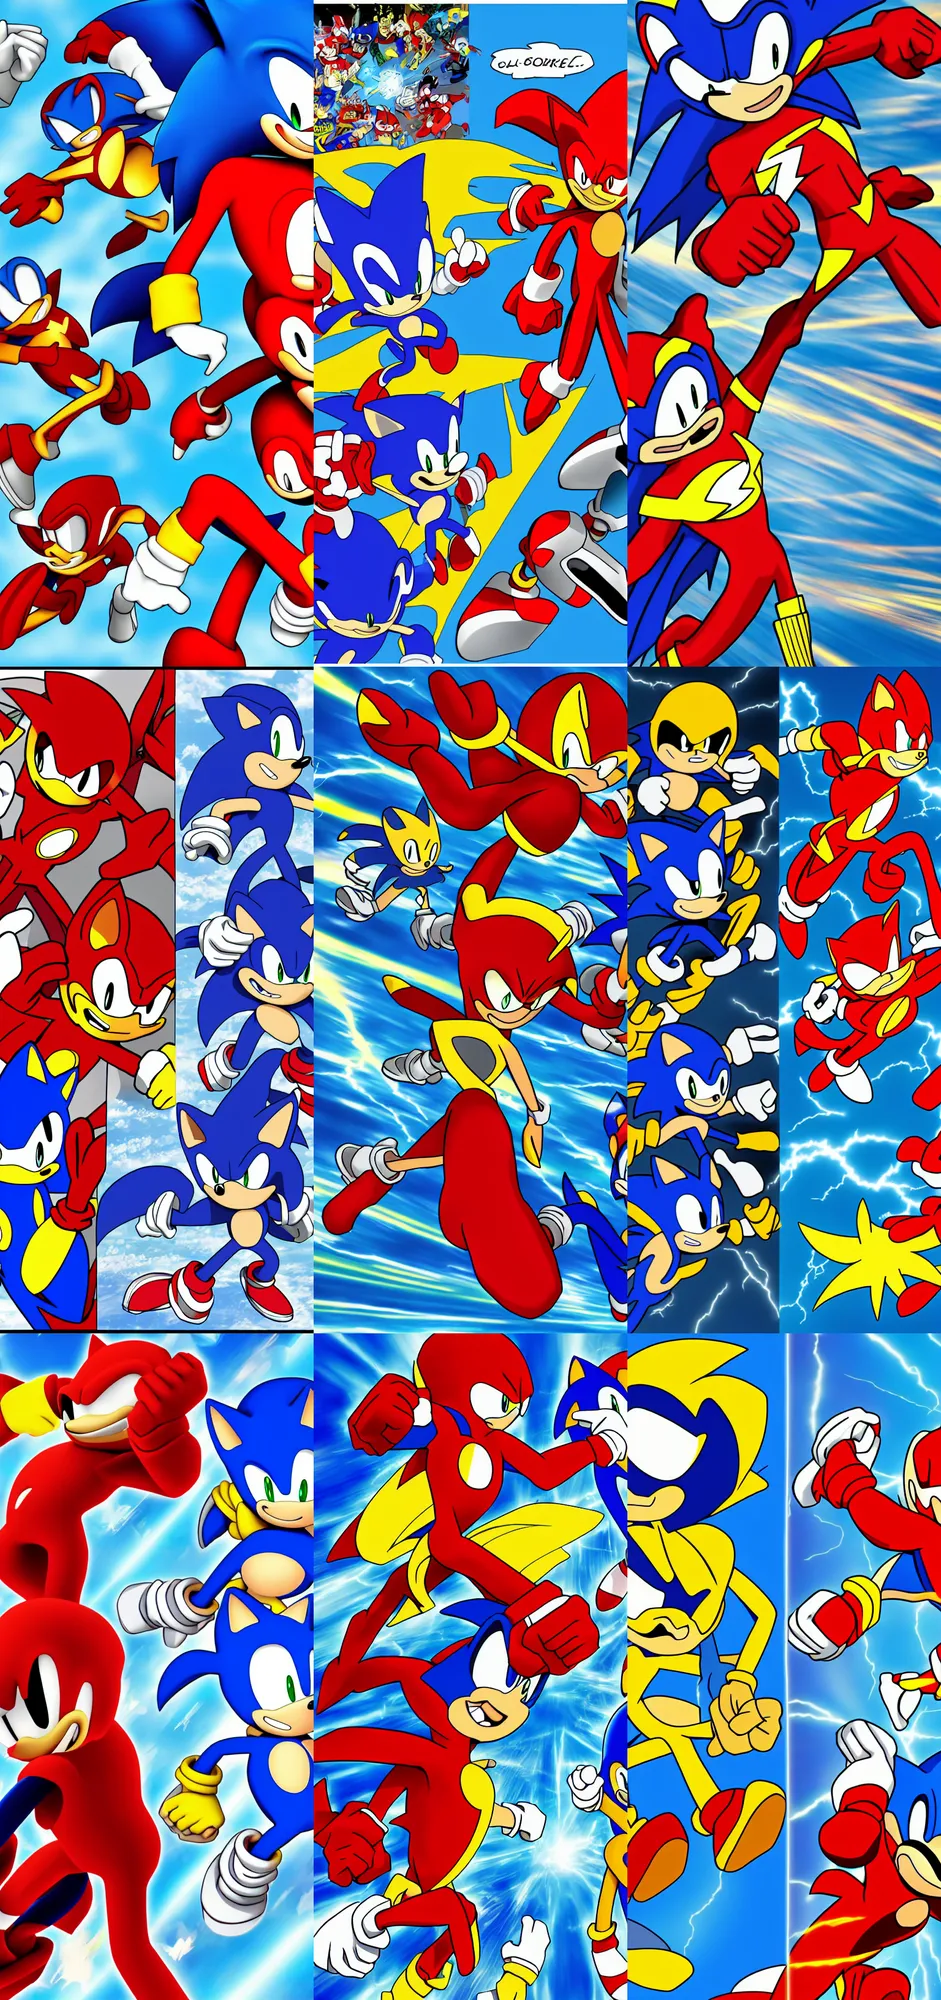 Prompt: Flash vs Sonic,8k resolution,3d,-W 540